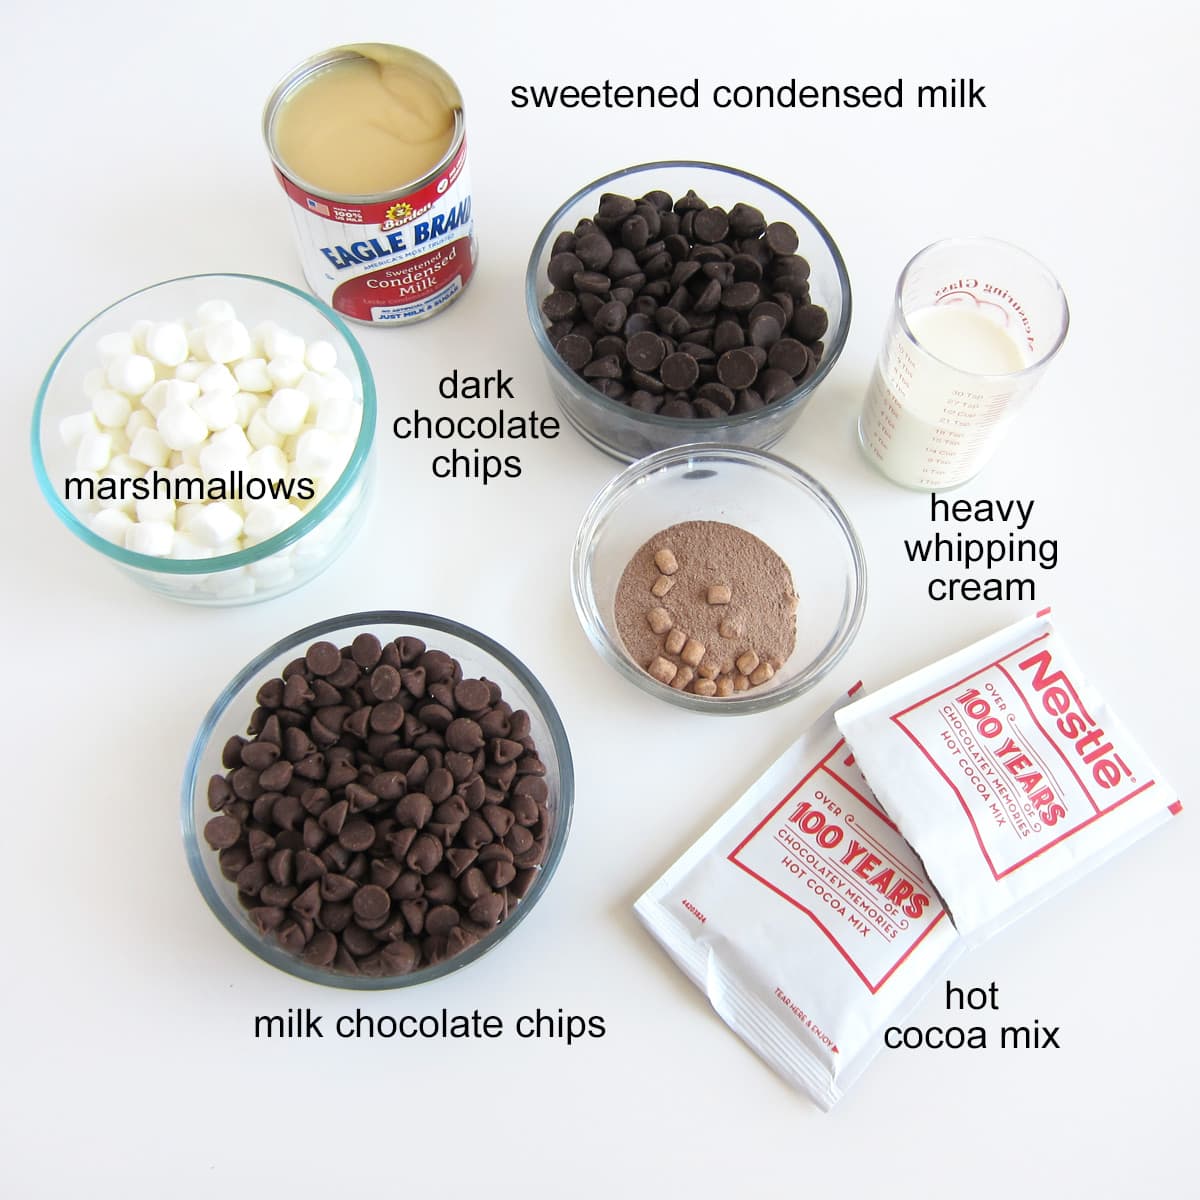 hot chocolate fudge ingredients including hot cocoa mix, dark chocolate, milk  chocolate, mini marshmallows, sweetened condensed milk, and heavy whipping cream.